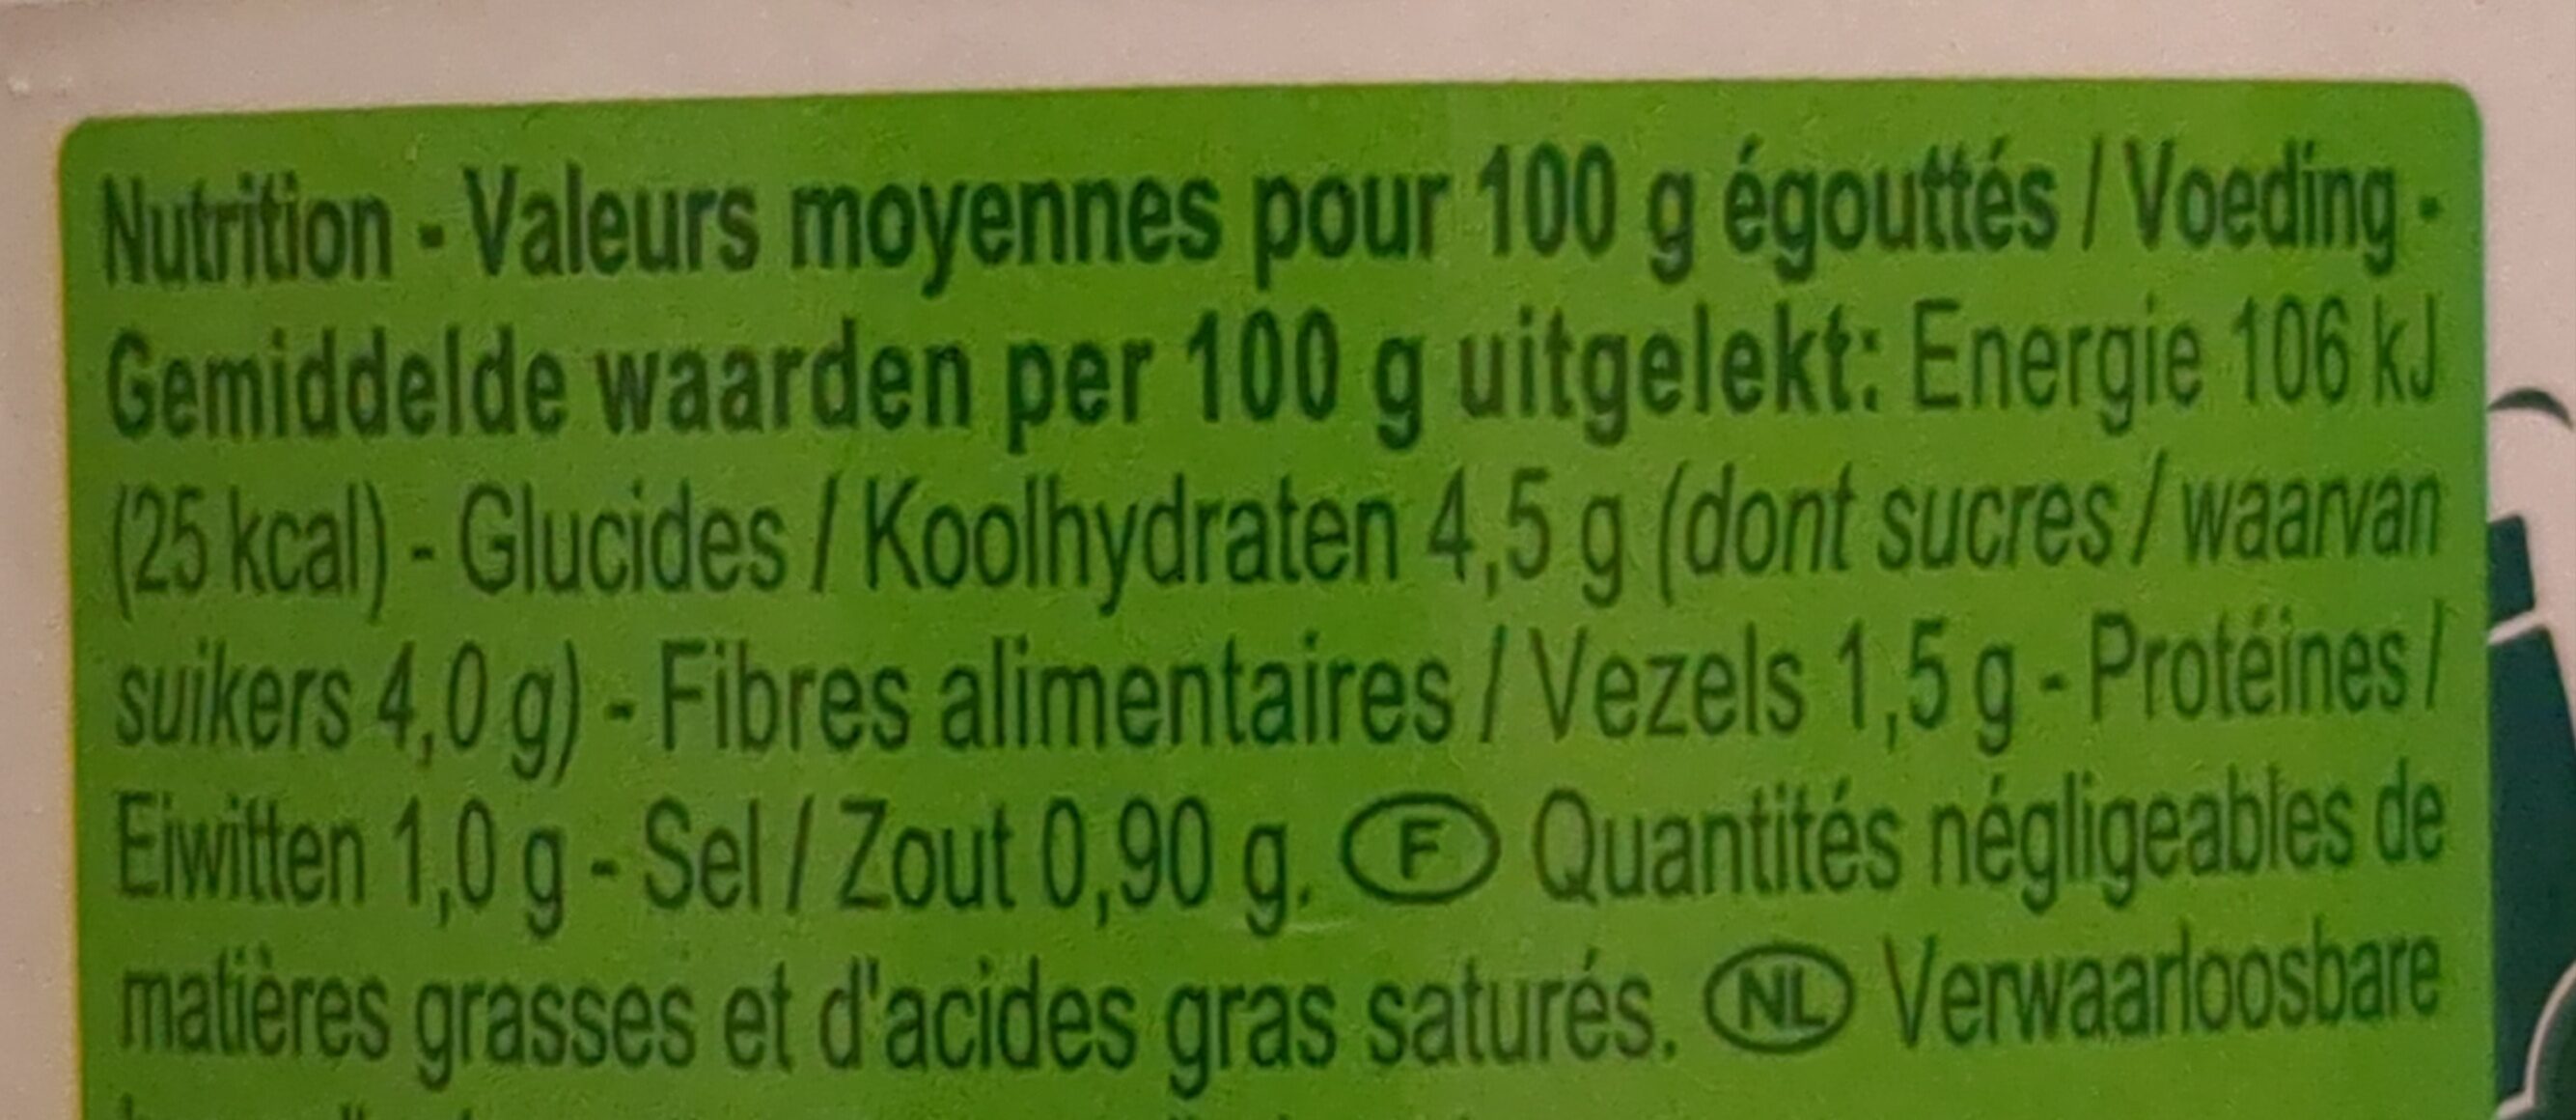 Oignons extra-fins - Tableau nutritionnel